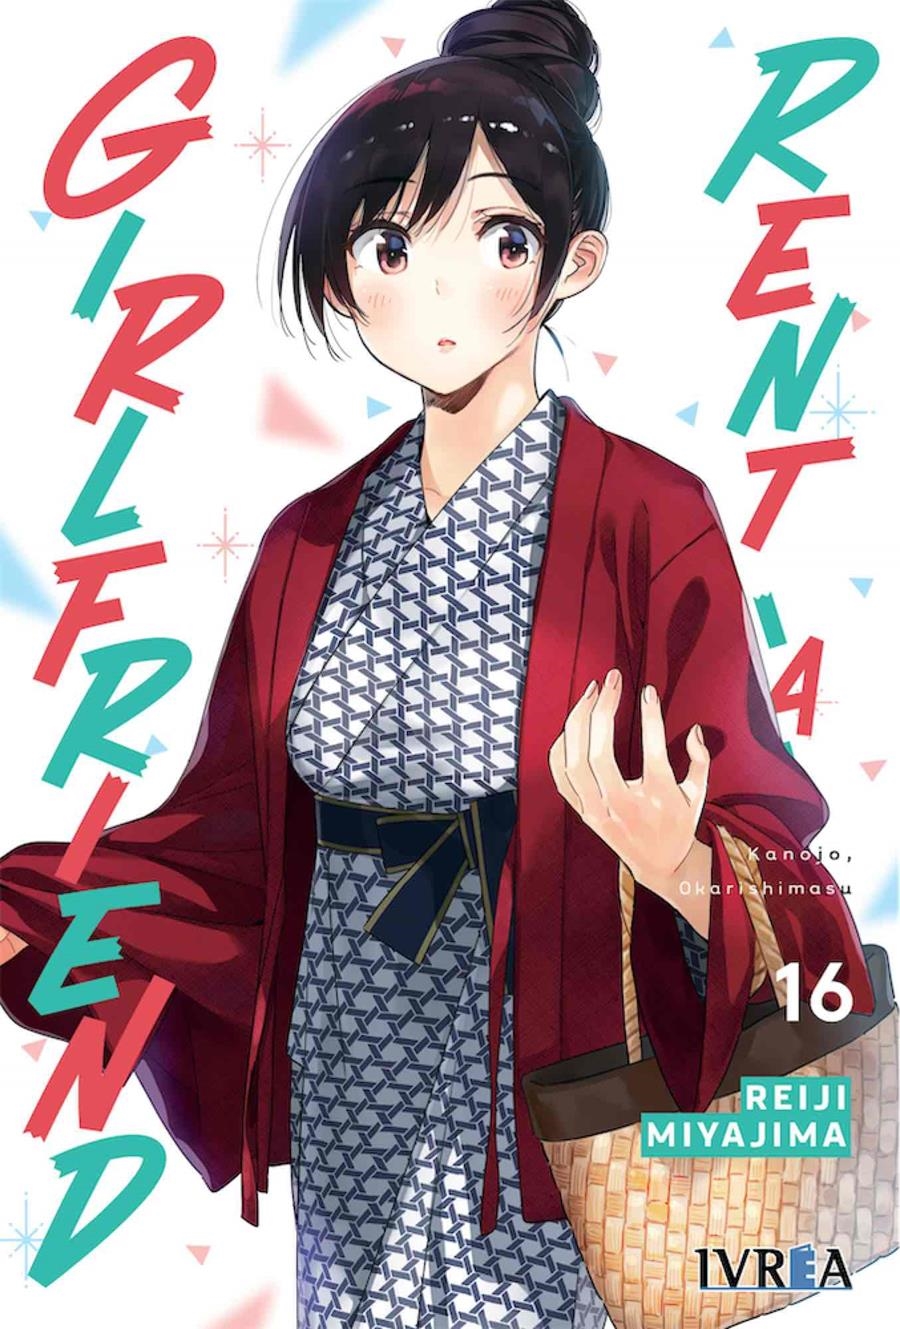 RENT-A-GIRLFRIEND Nº16 [RUSTICA] | MIYAJIMA, REIJI | Akira Comics  - libreria donde comprar comics, juegos y libros online